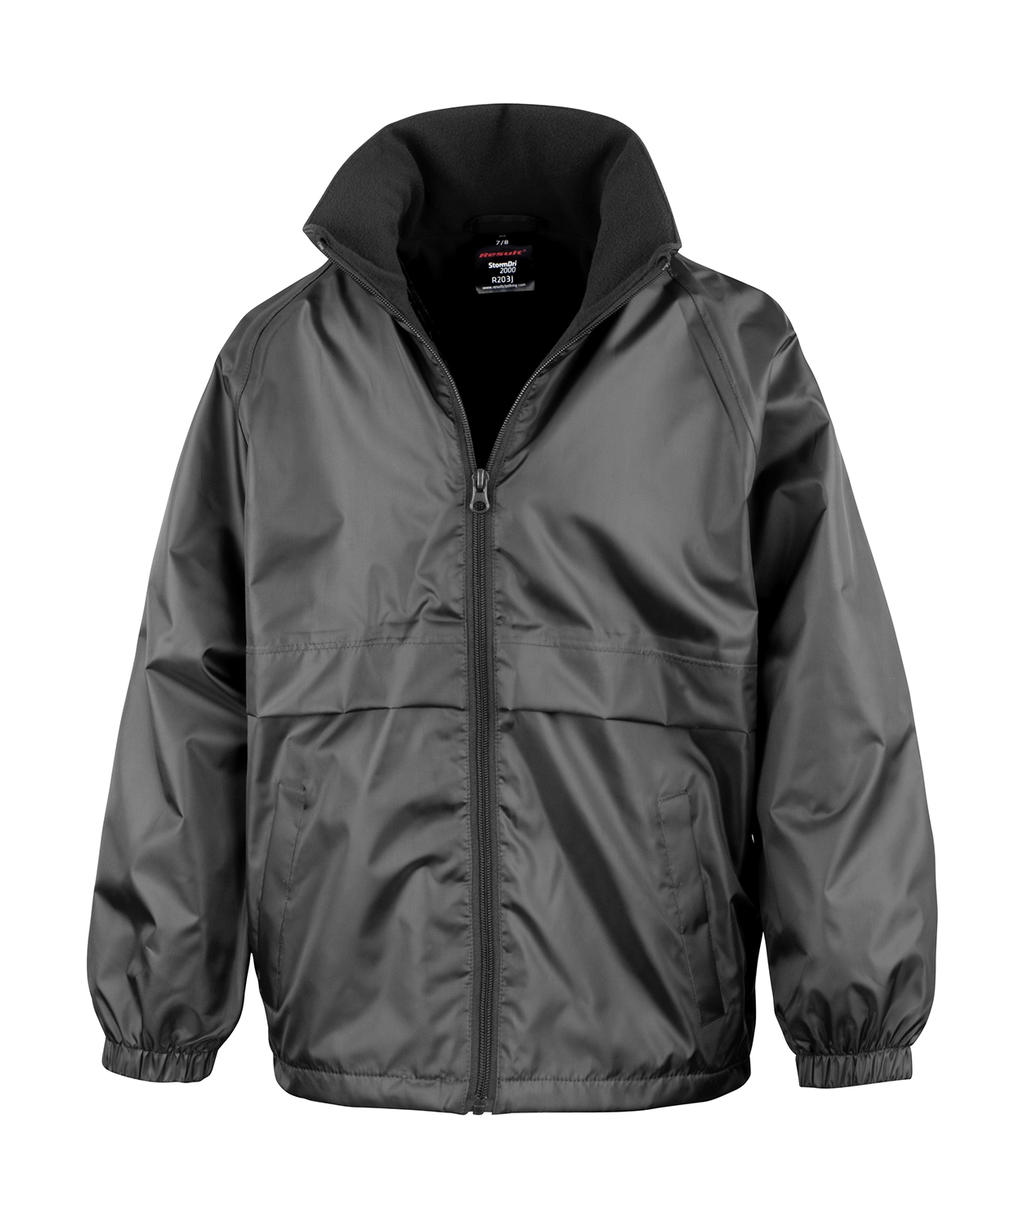  CORE Junior Microfleece Lined Jacket in Farbe Black